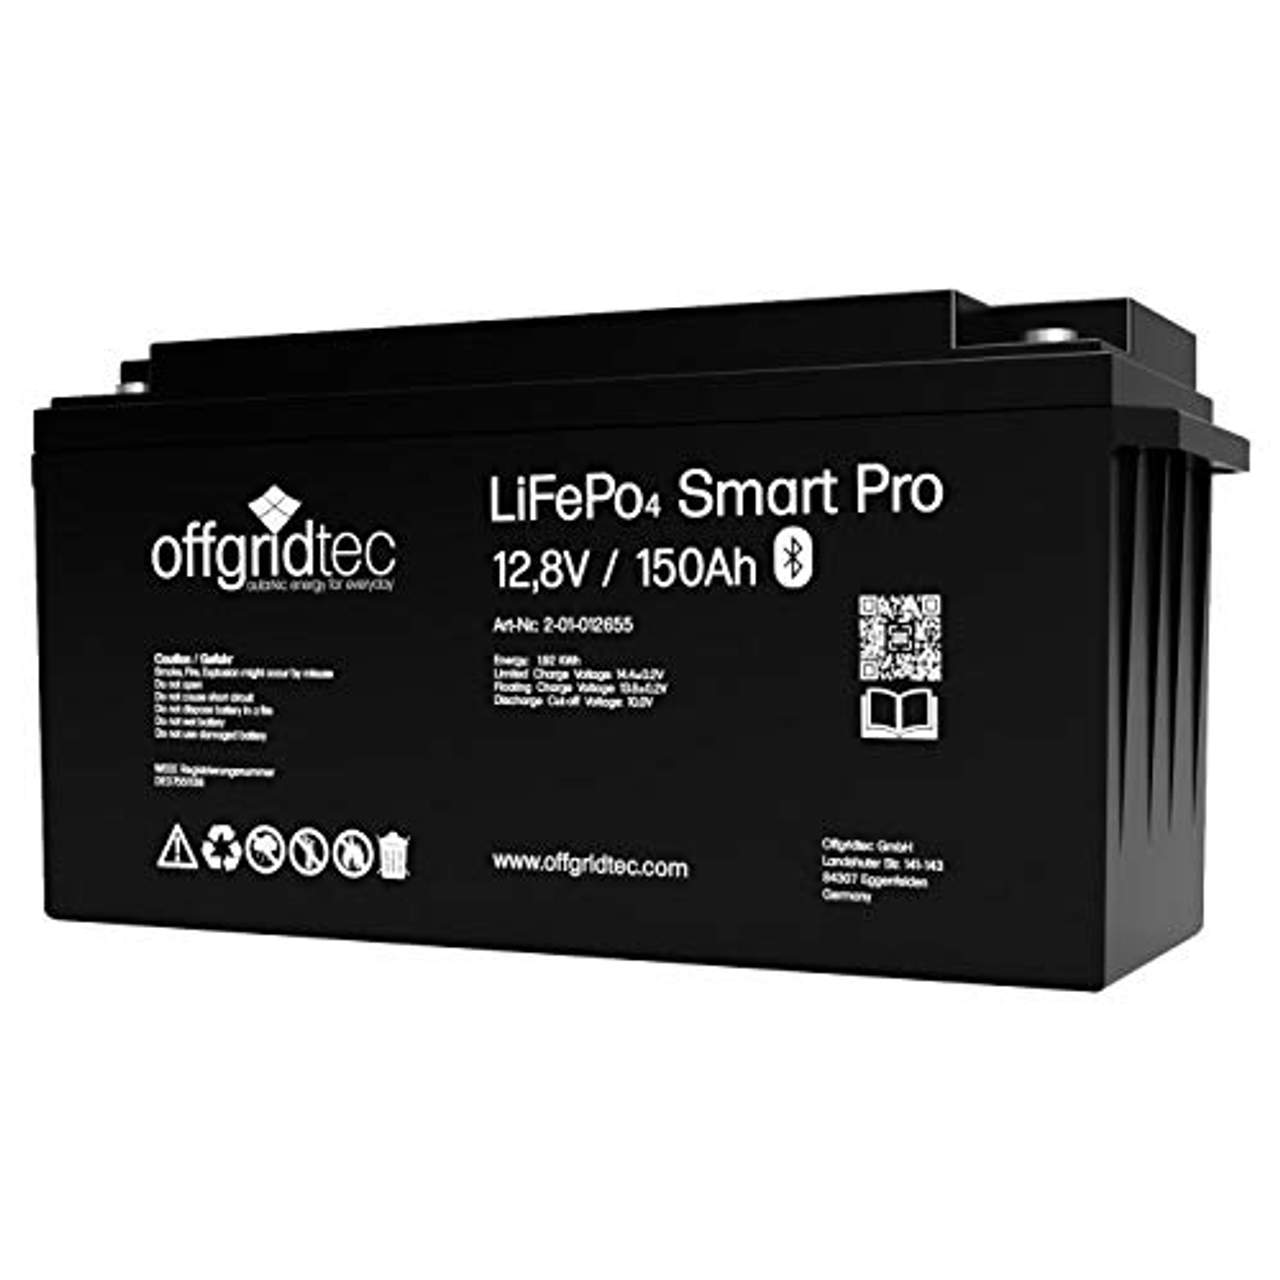 Offgridtec LiFePo4 Batterie 12/150 12,8V 150Ah 1920Wh BMS integriert